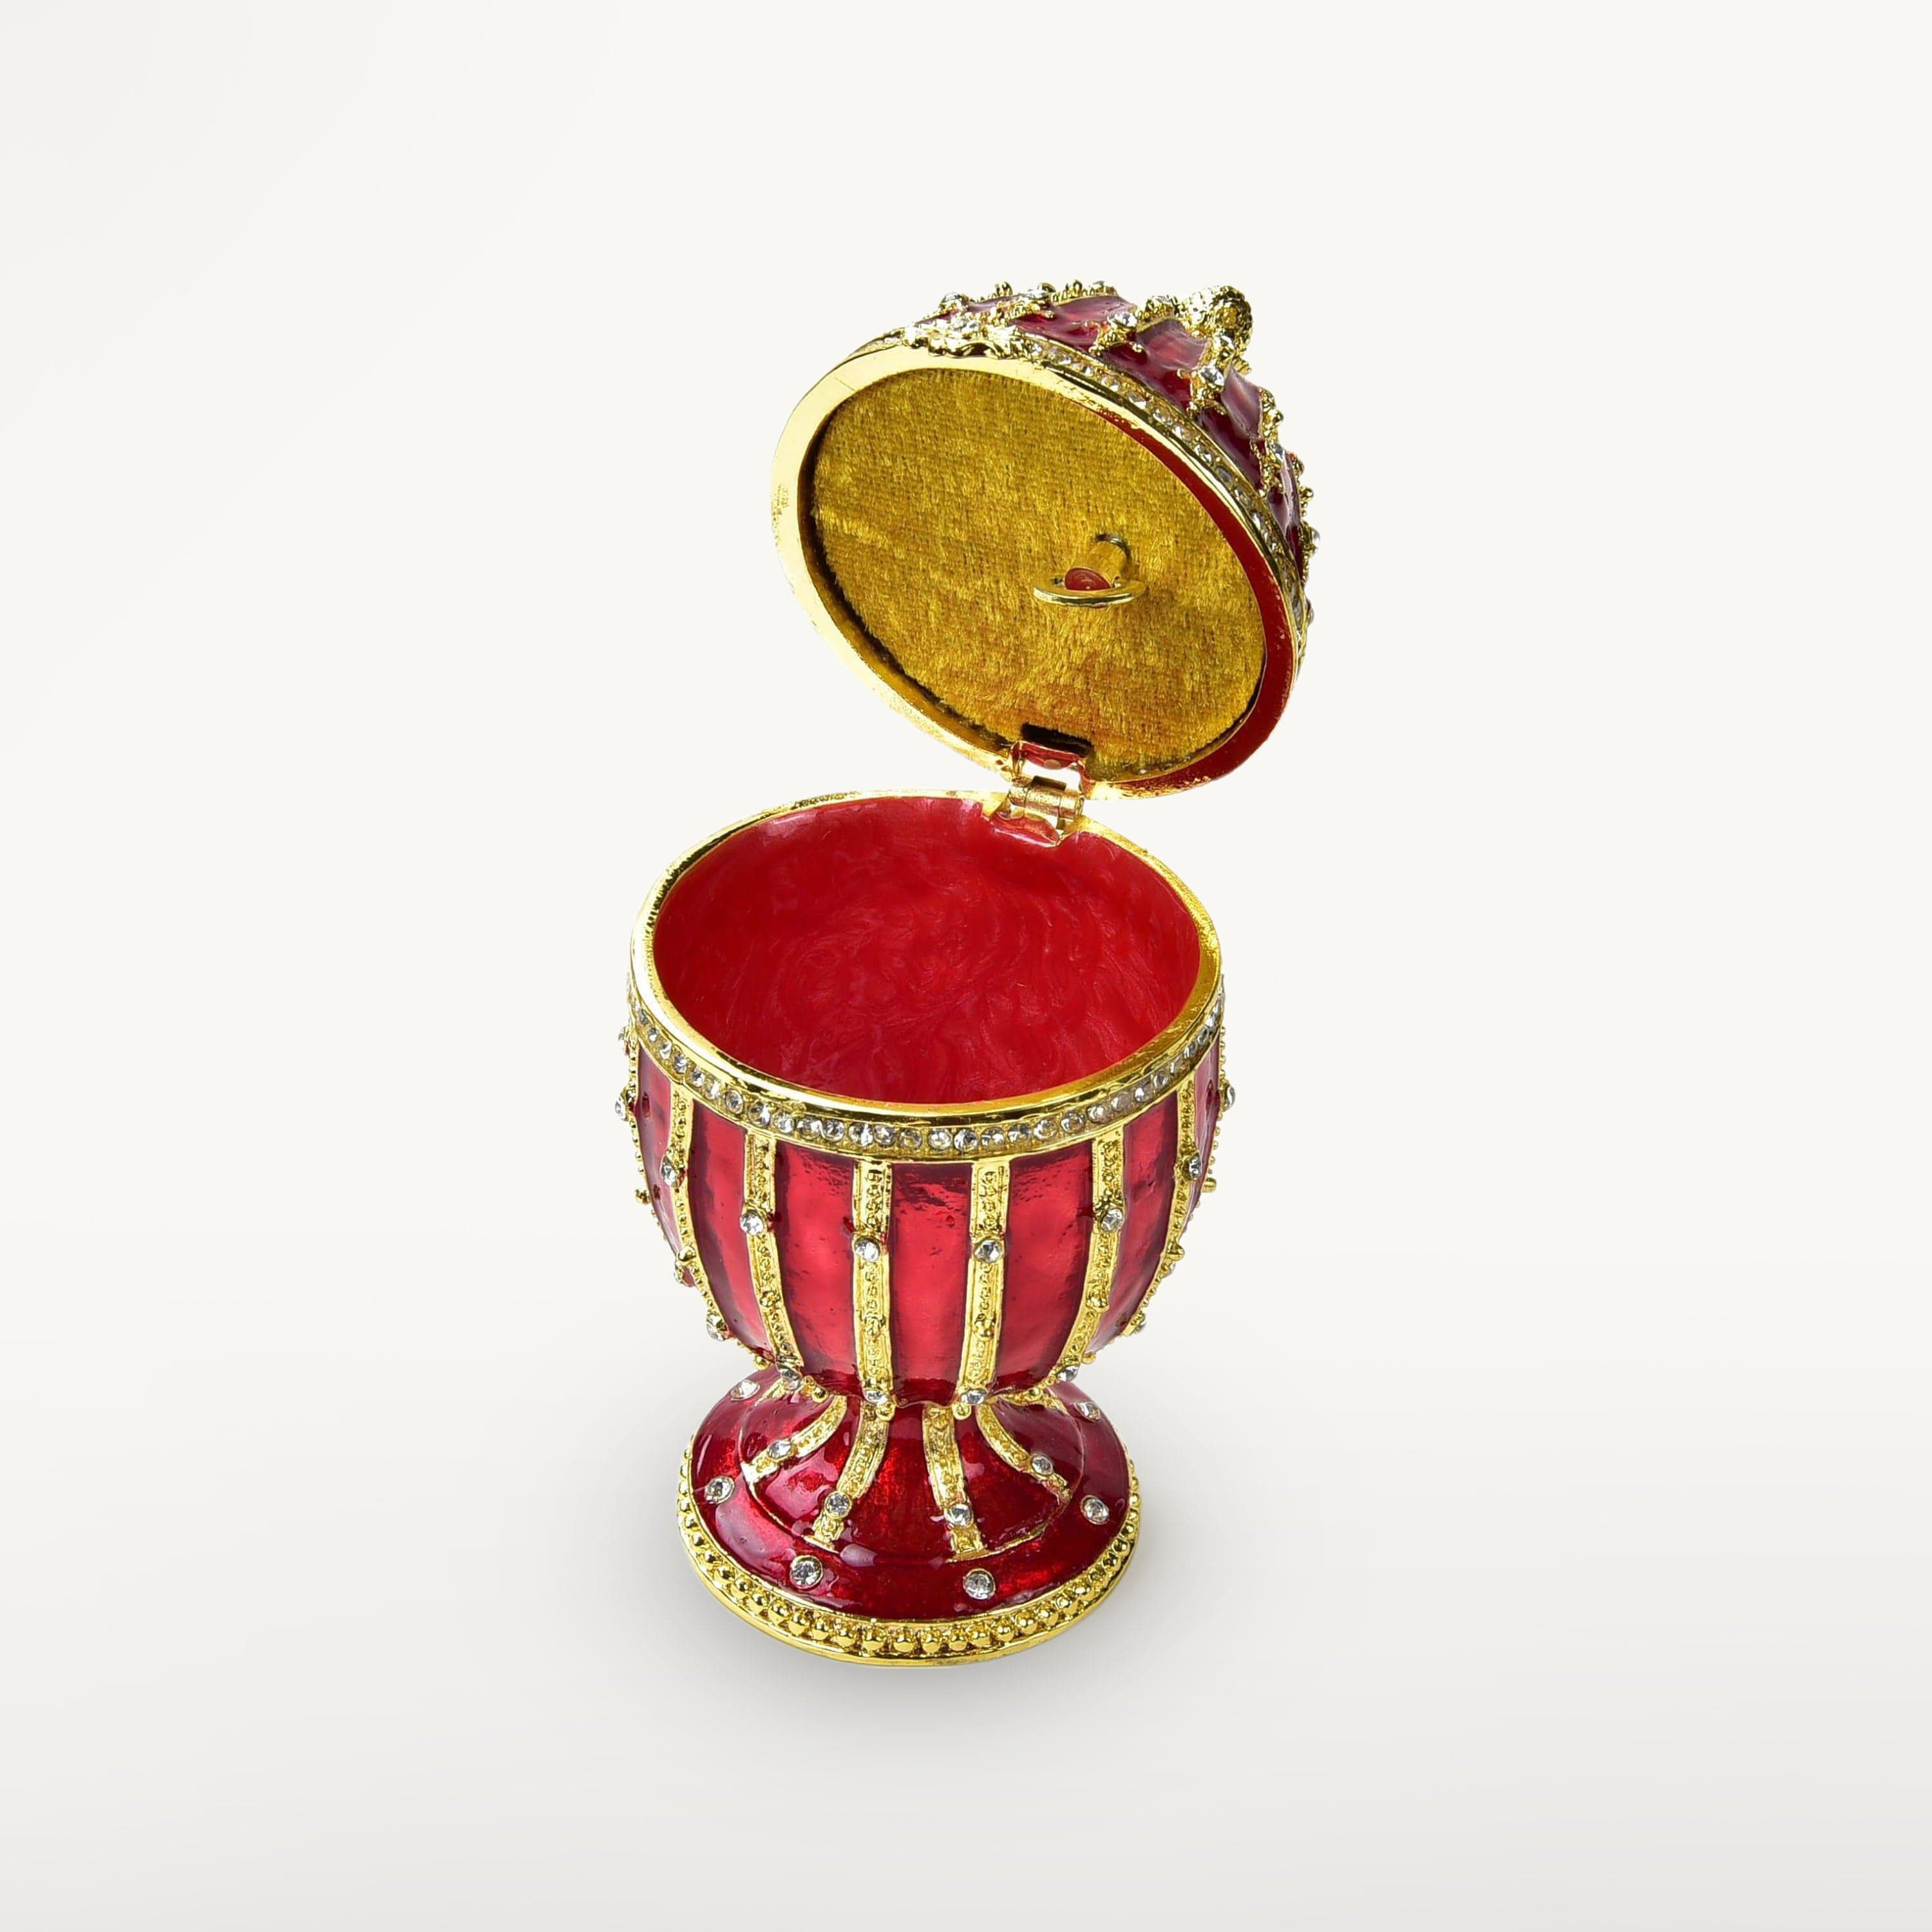 Kalifano Vanity Figurine Red Faberge Egg Figurine Keepsake Musical Box made with Crystals SVA-089